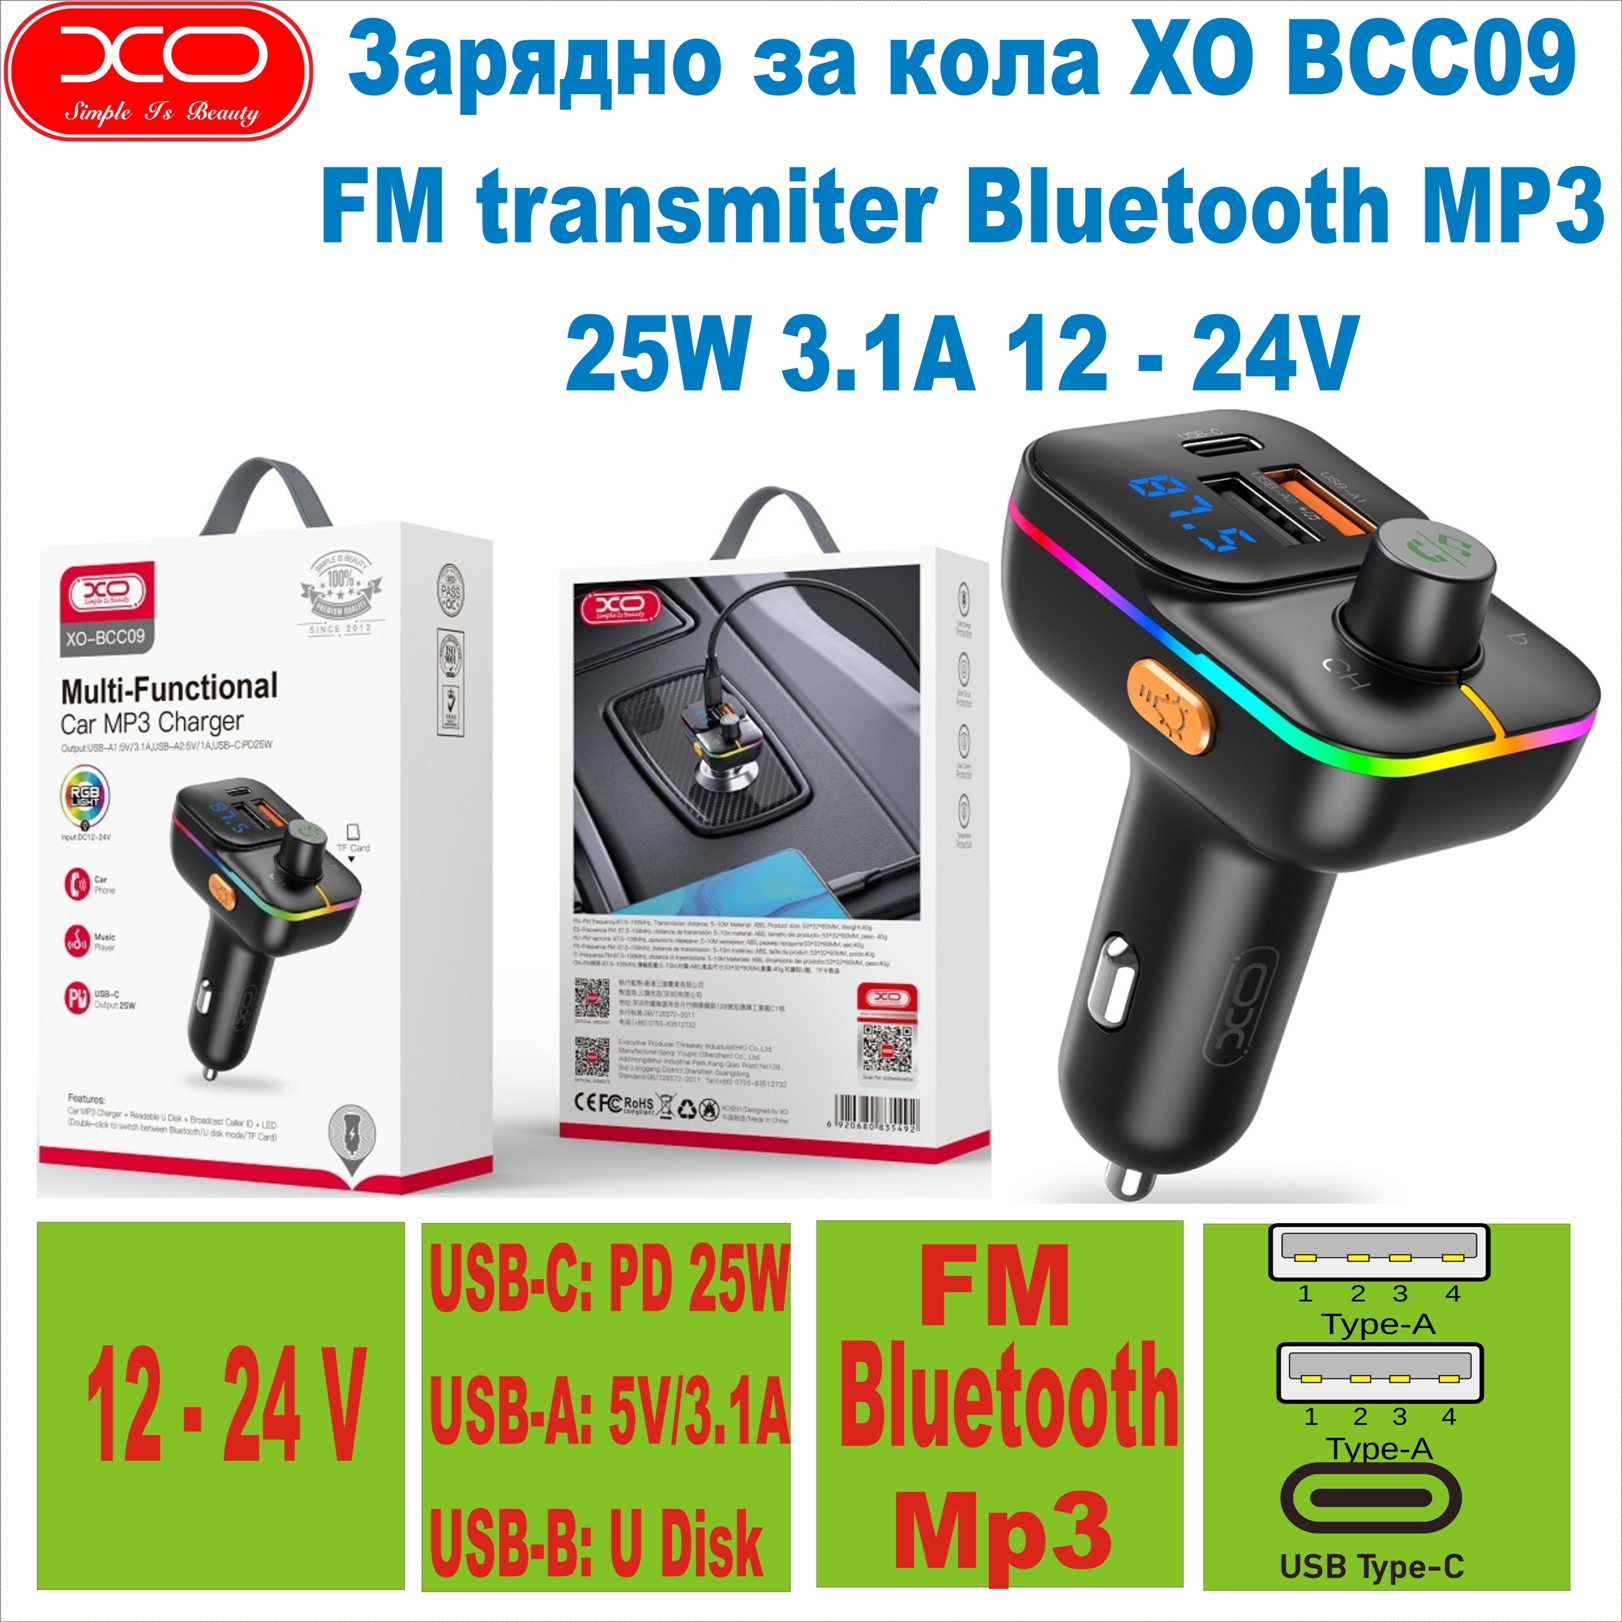 Зарядно за кола XO BCC09 FM transmiter 25W MP3